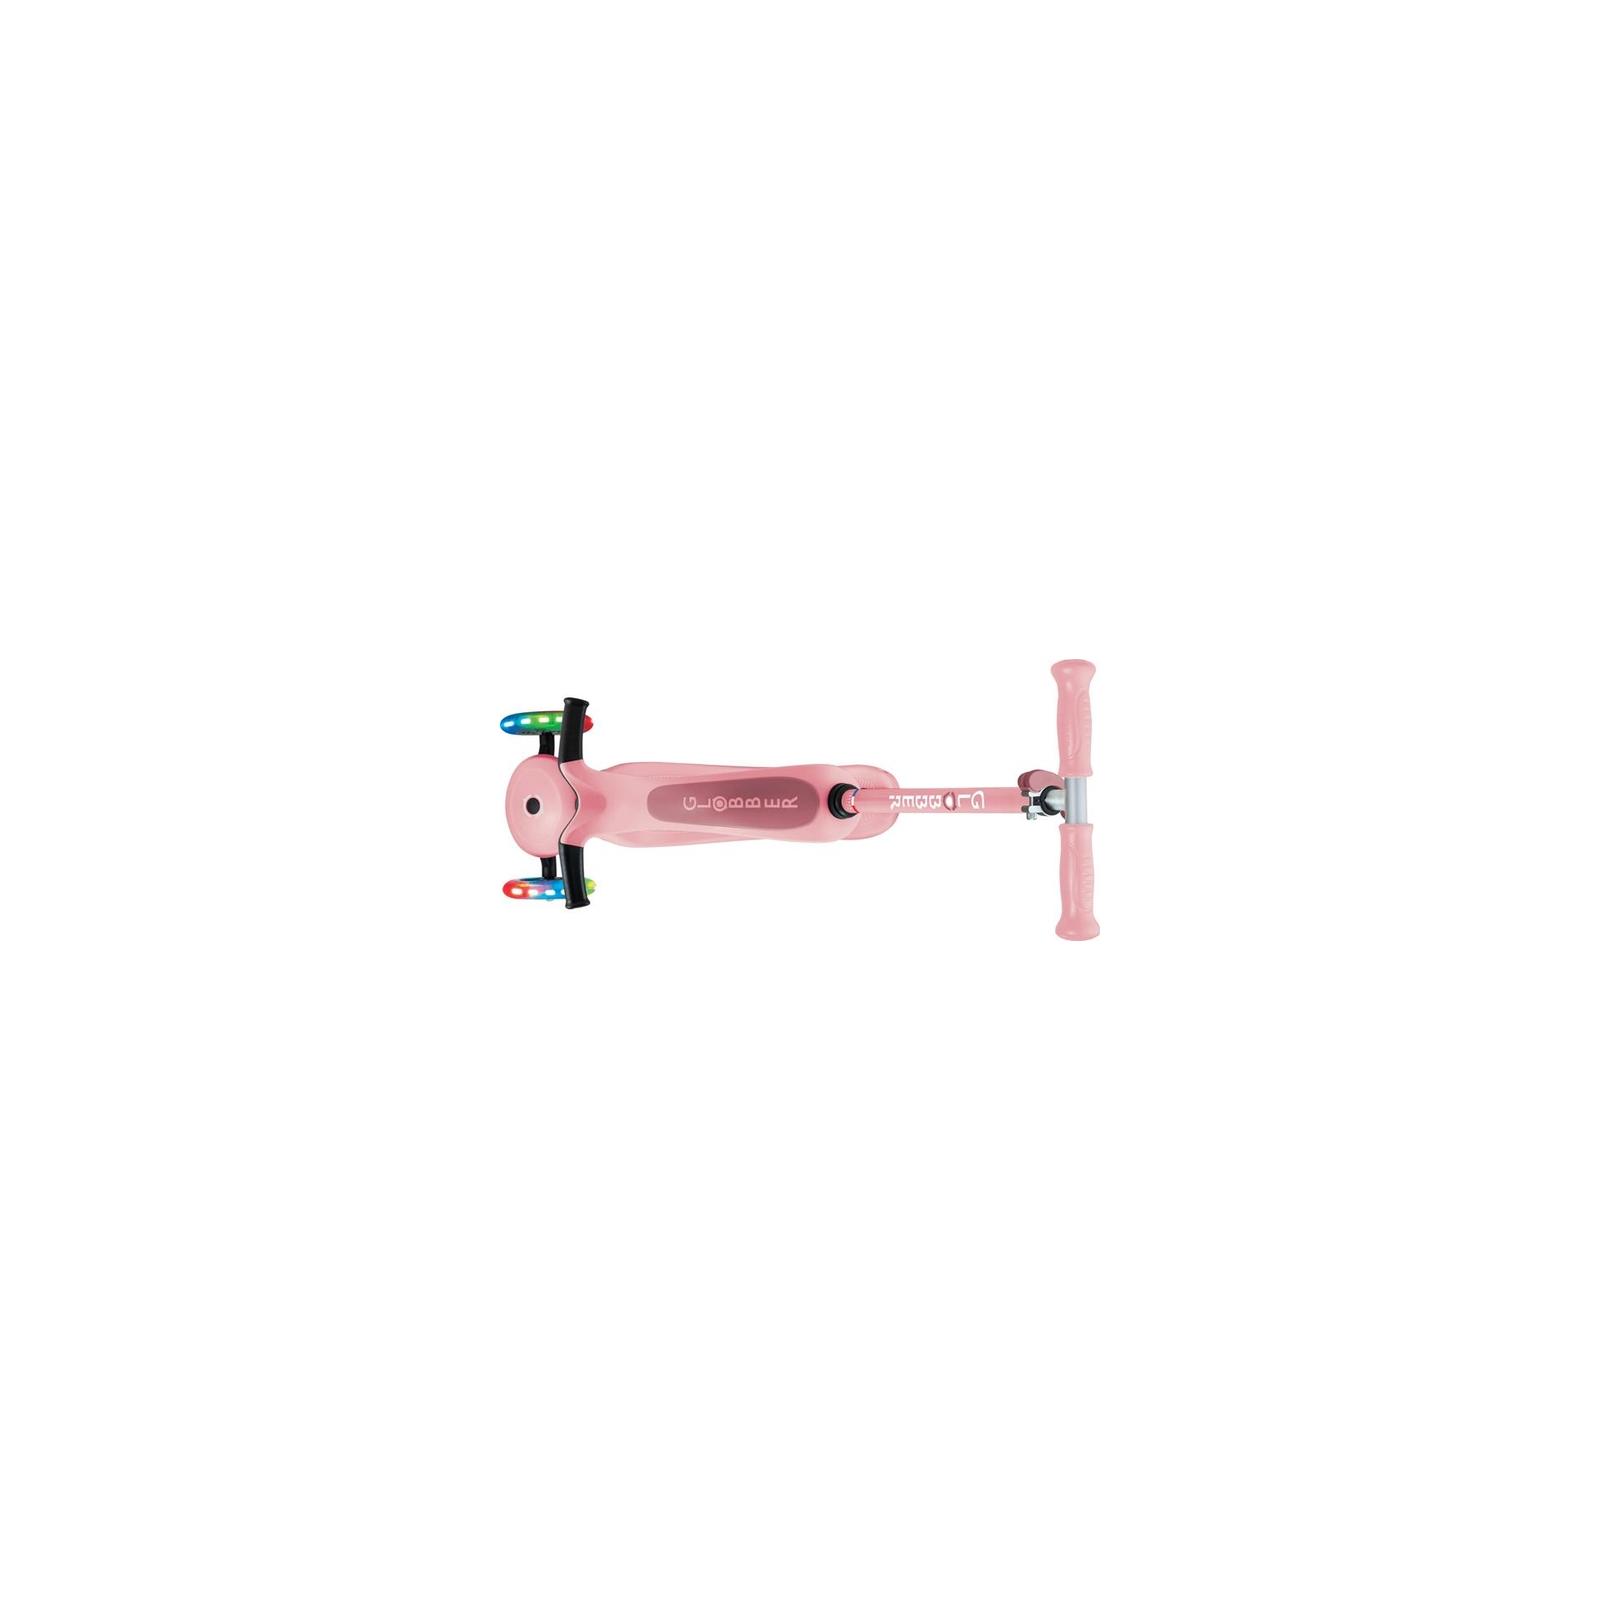 Самокат Globber Go Up Sporty Led пастельно-рожевий (452-710-4) зображення 10